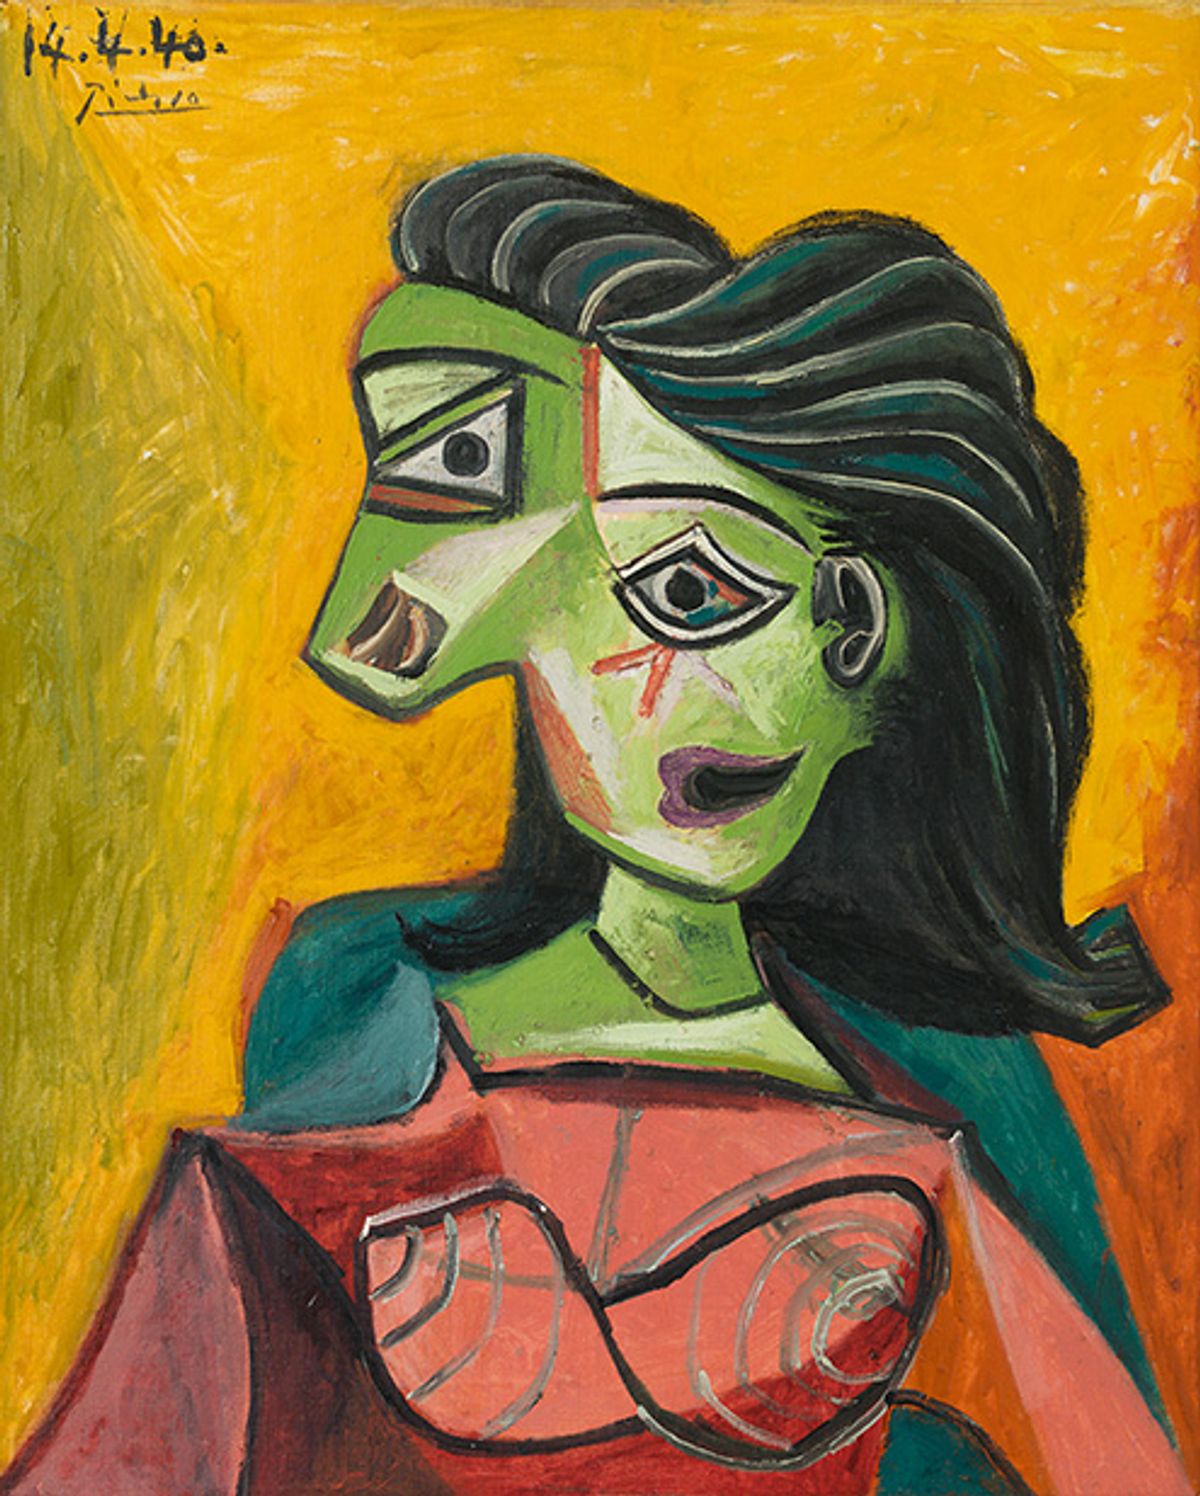 Picasso's Buste de femme (Dora Maar), 1940 © 2019 Estate of Pablo Picasso/Artist Rights Society (ARS), New York. Photo: Erich Koyama. Courtesy Gagosian.